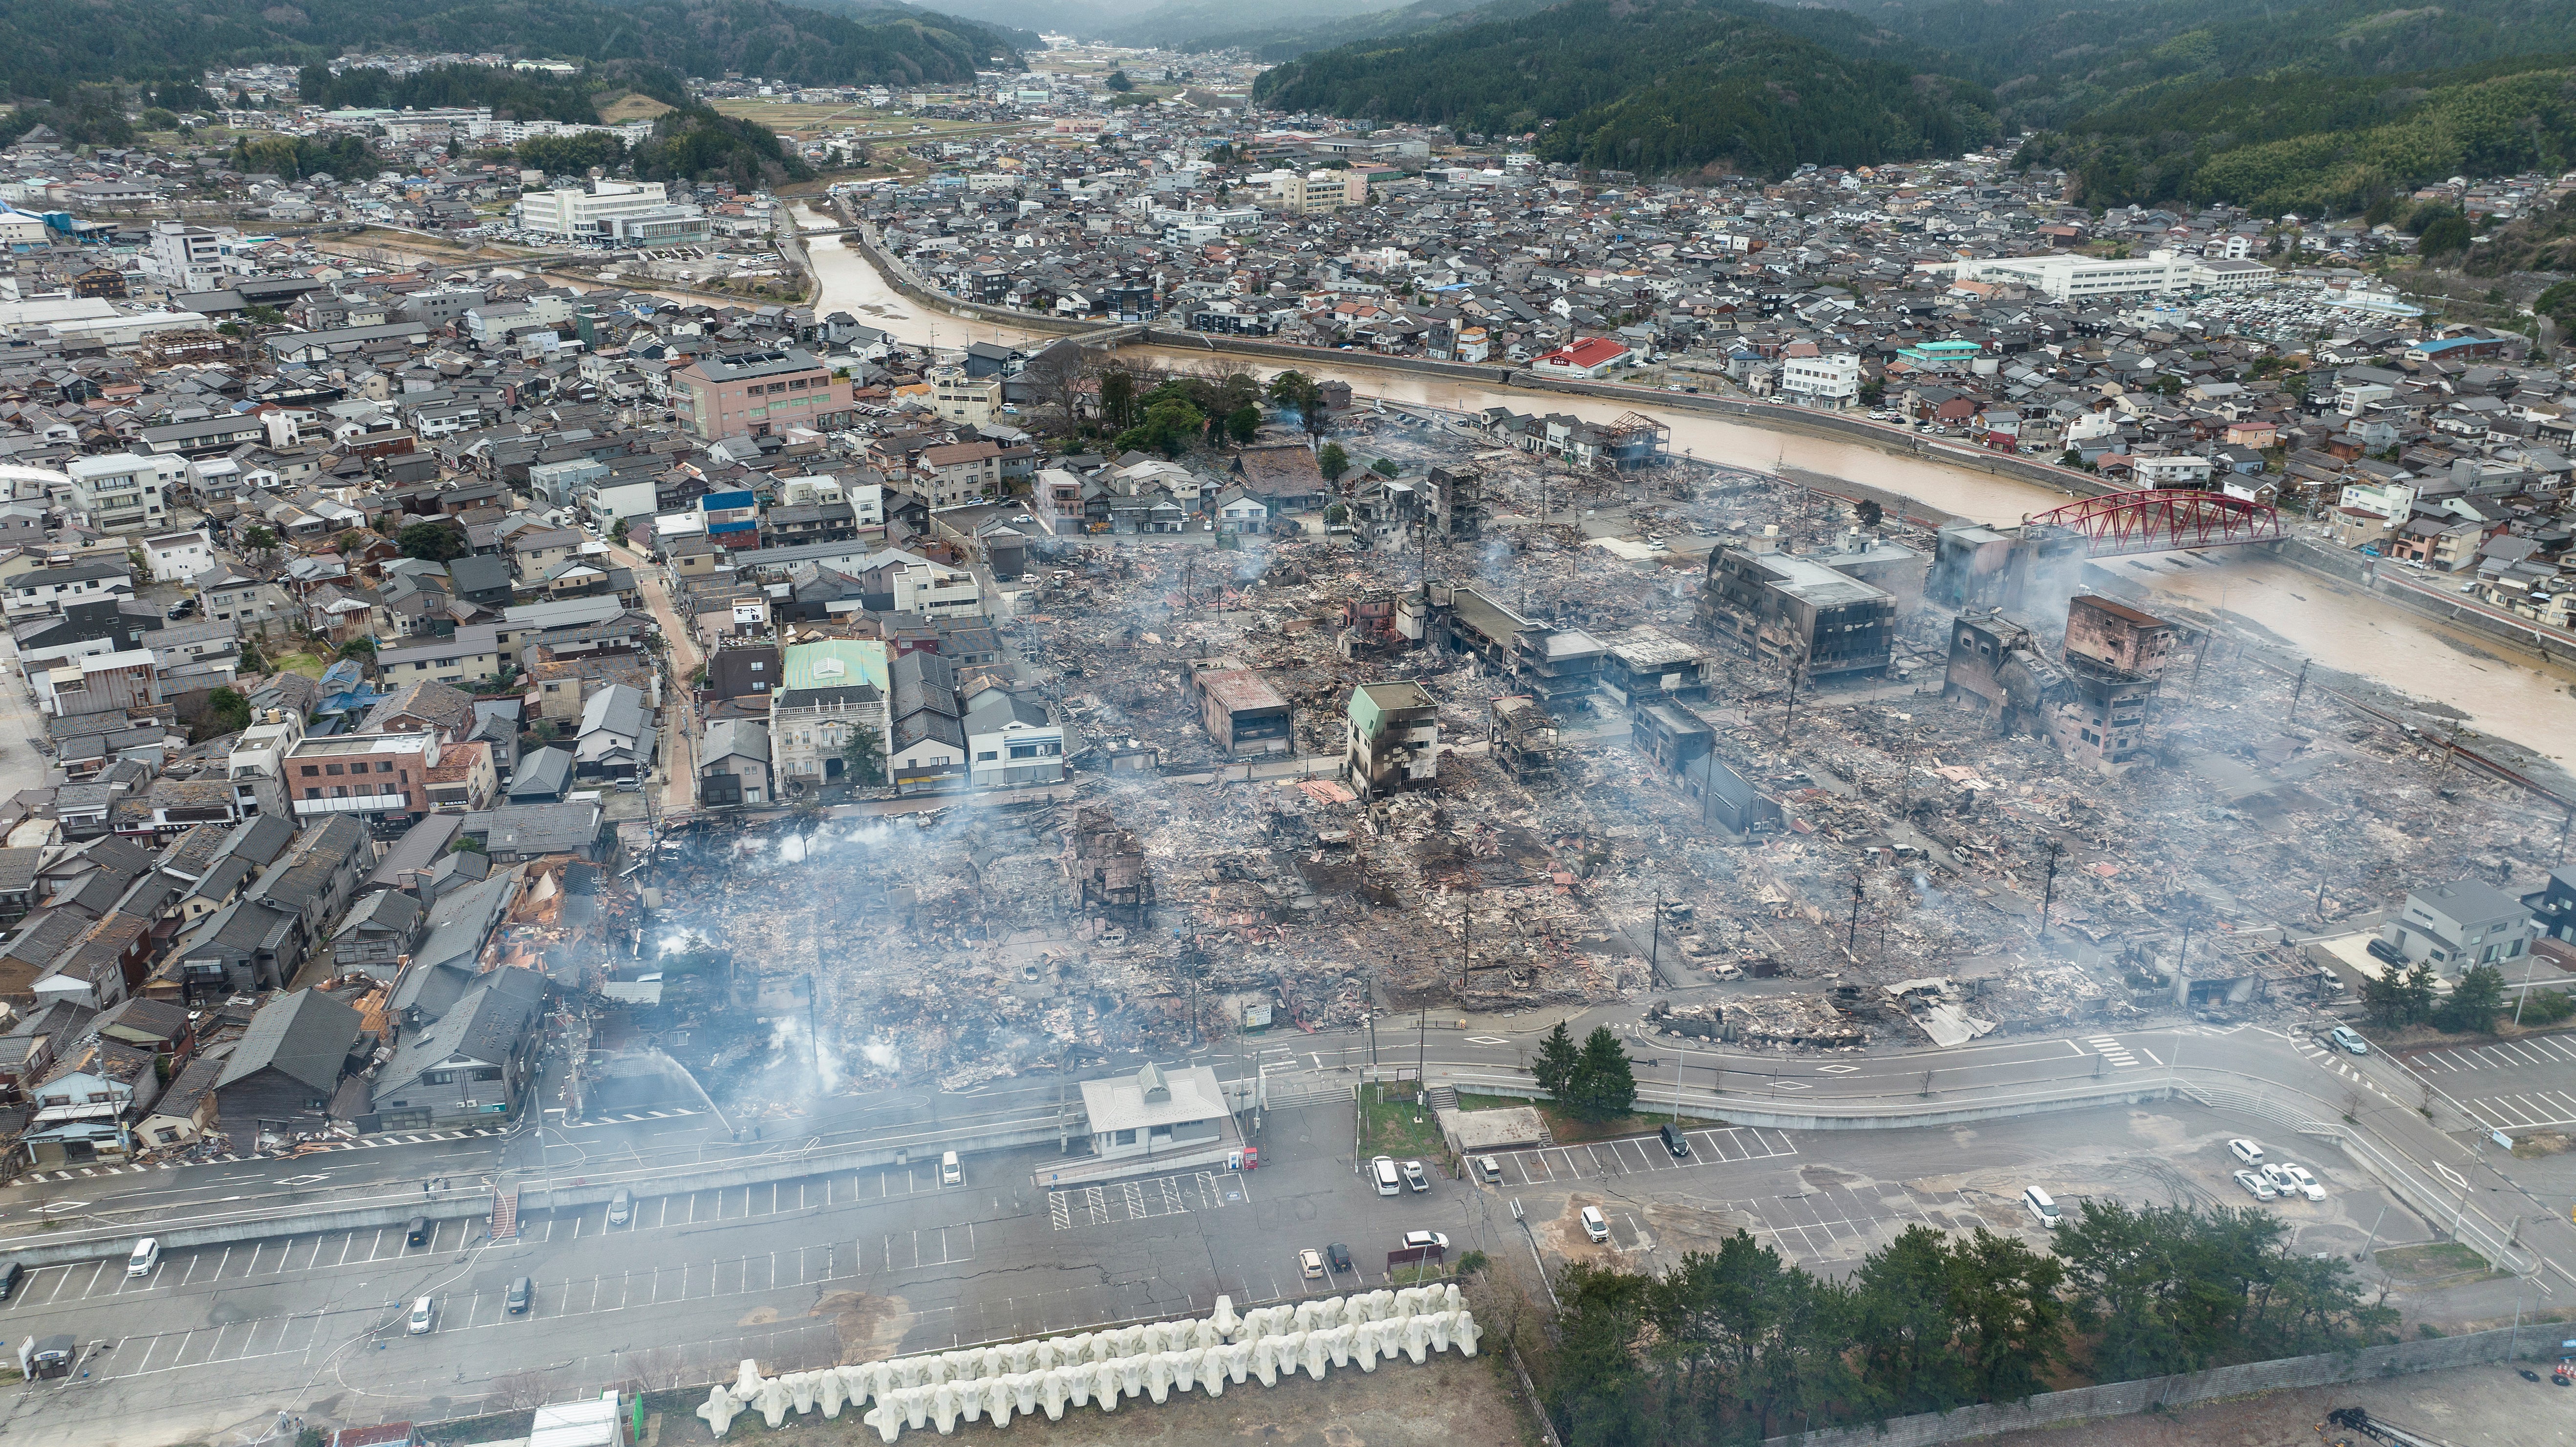 This aerial photo shows smoke rising from an area following a large fire in Wajima, Ishikawa prefecture